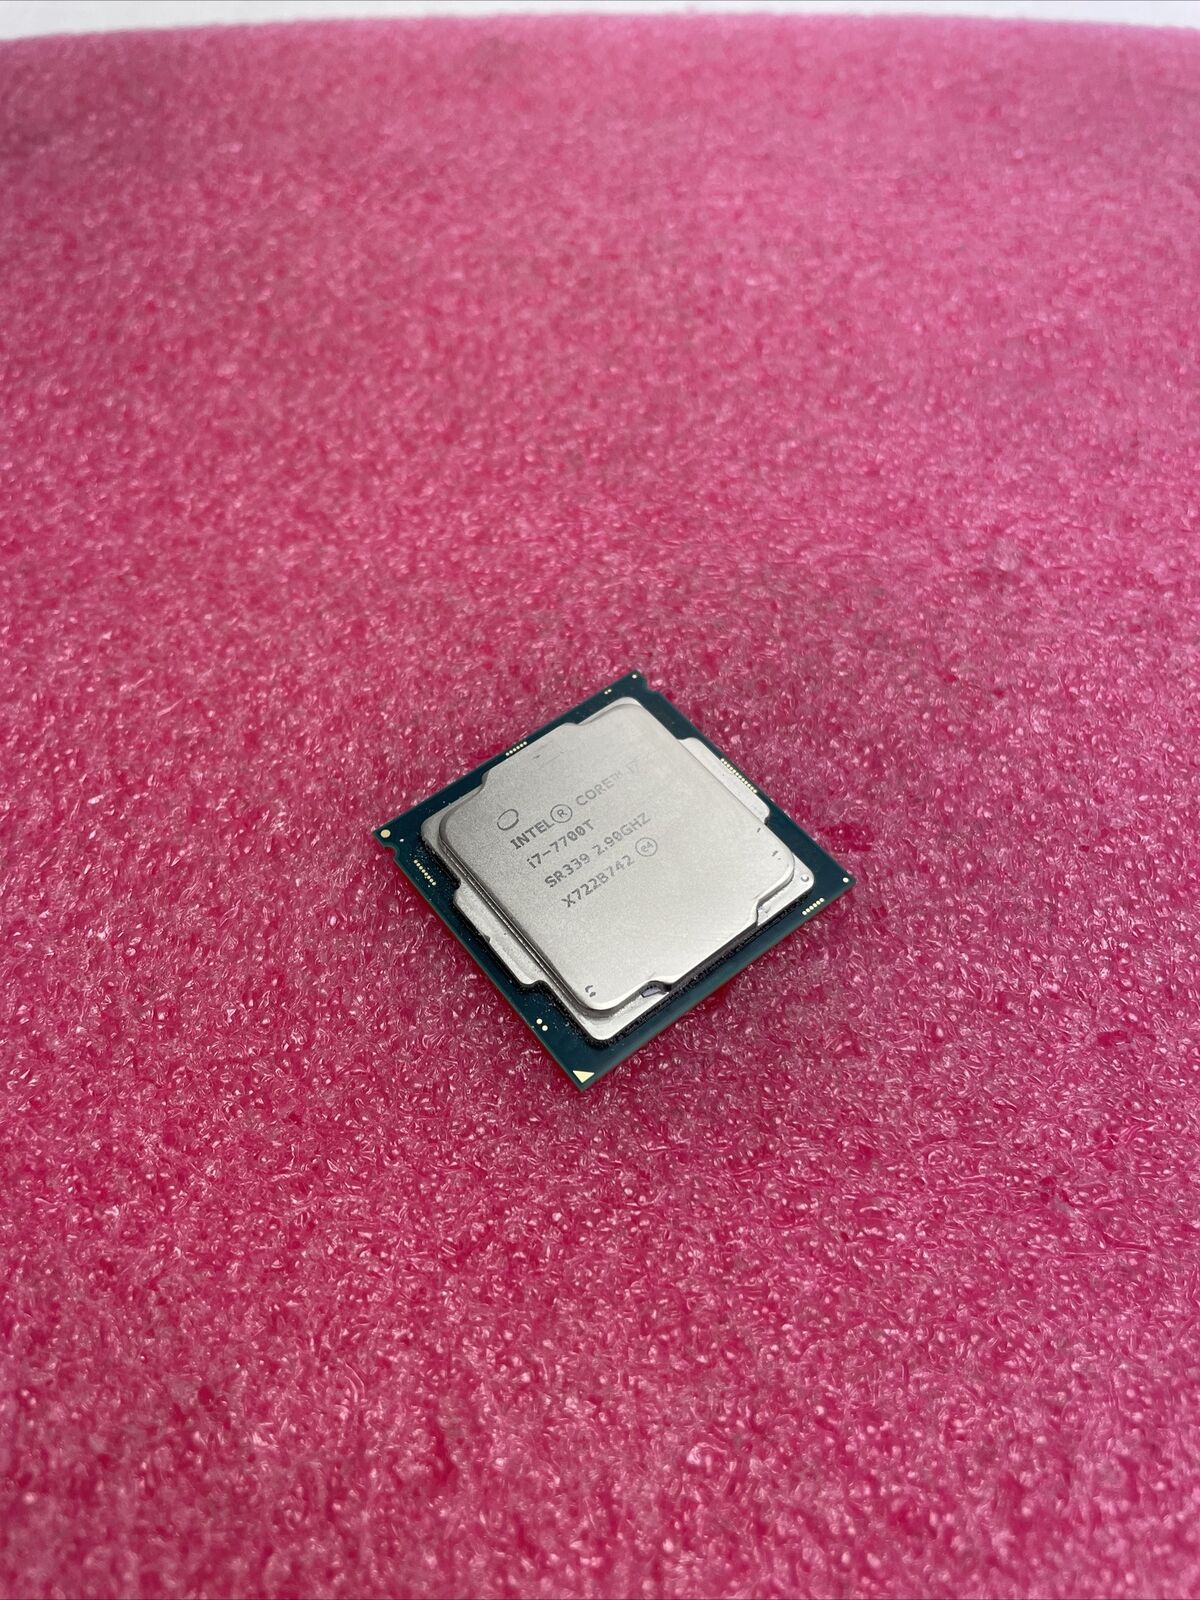 Intel Core i7-7700T SR339 2.9GHz Processor